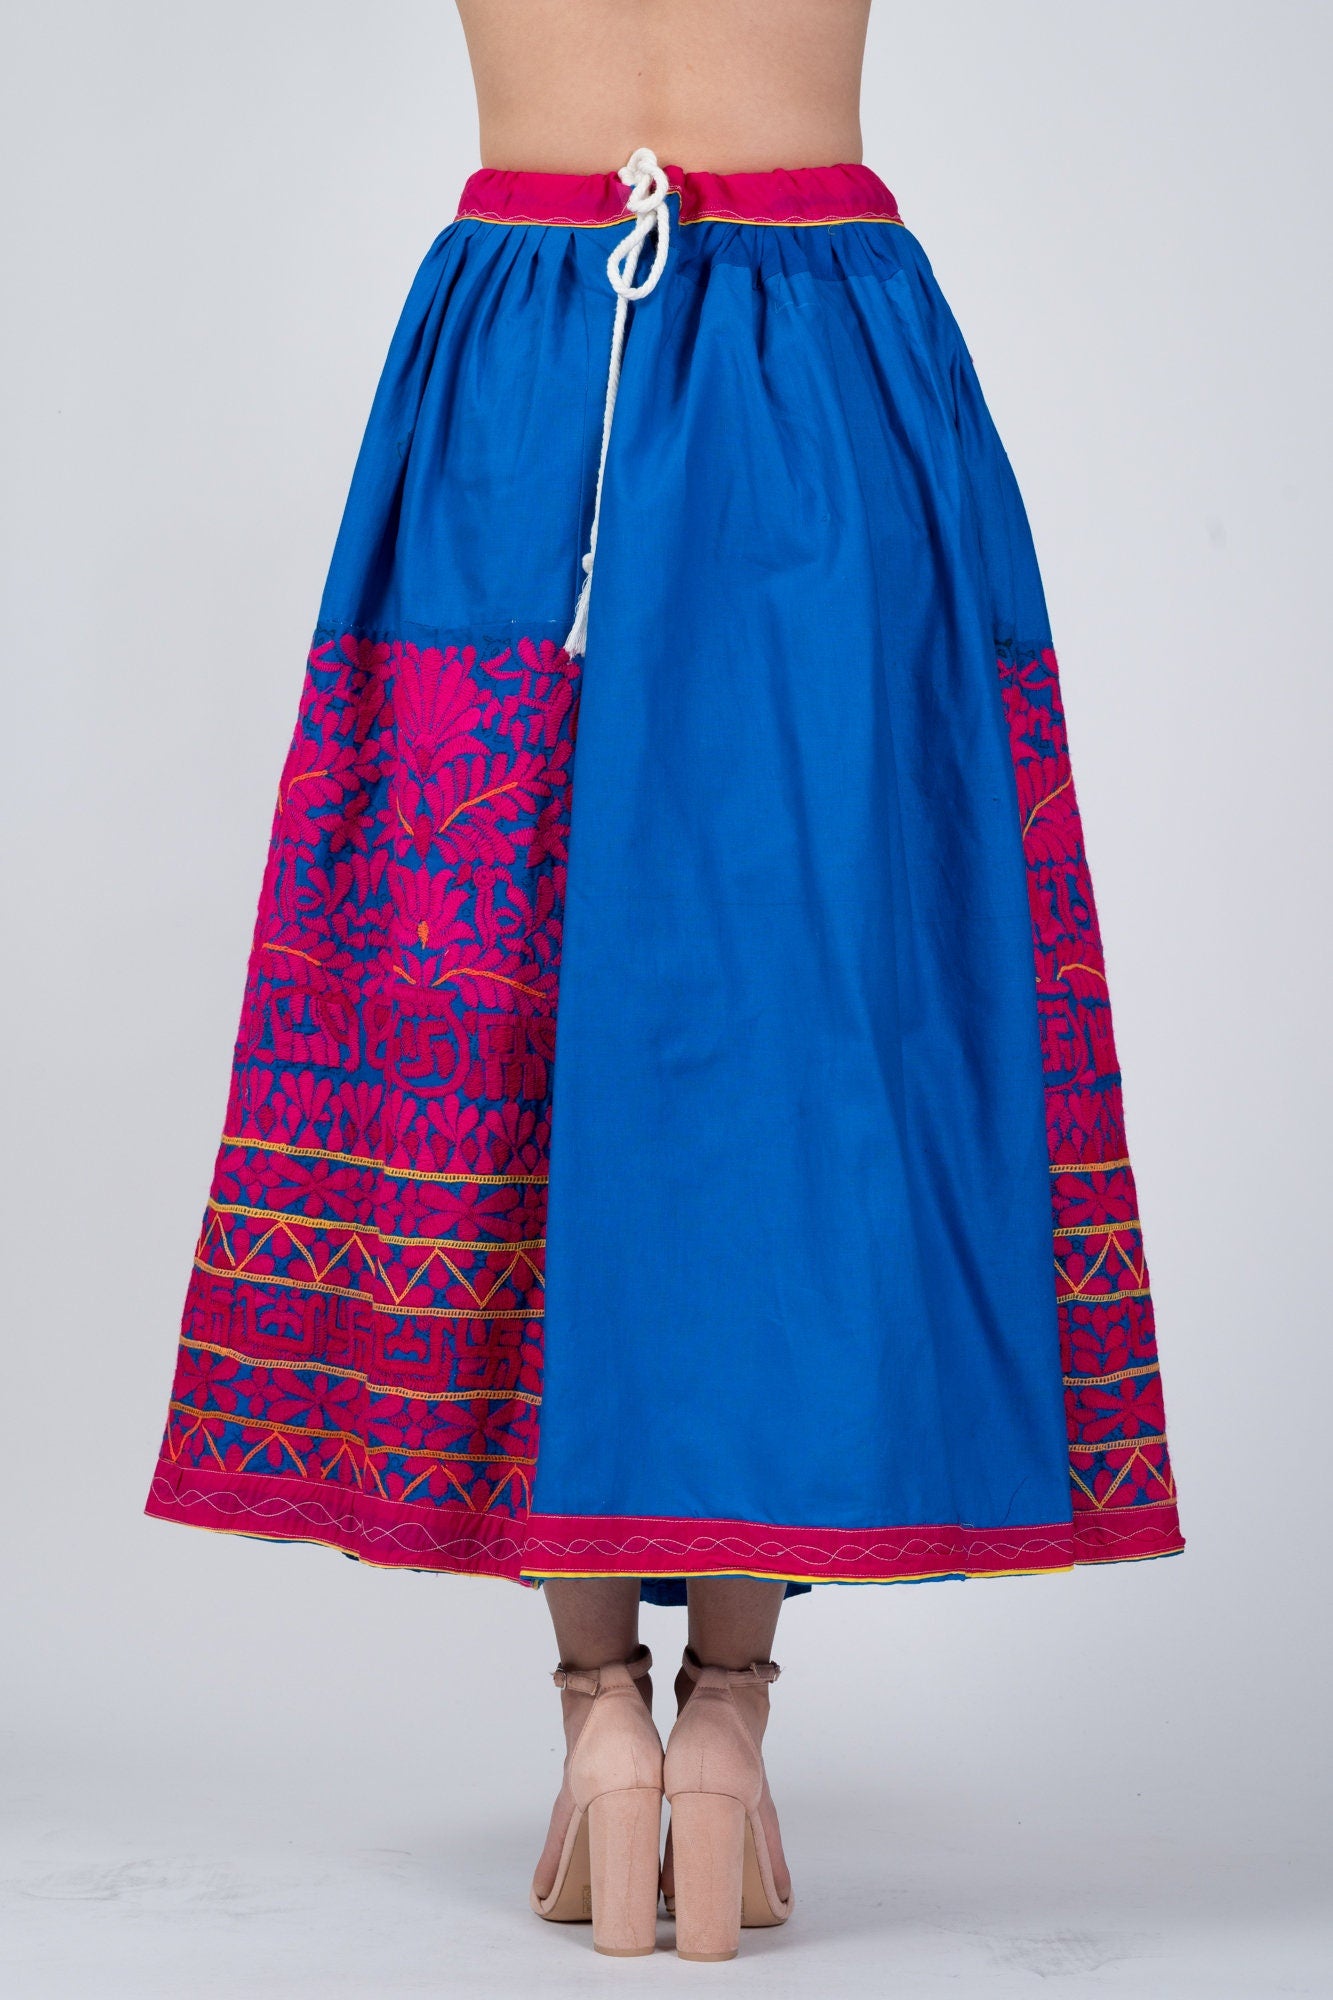 Vintage Indian Rabari Hand Embroidered Ethnic Skirt - Medium to Large 